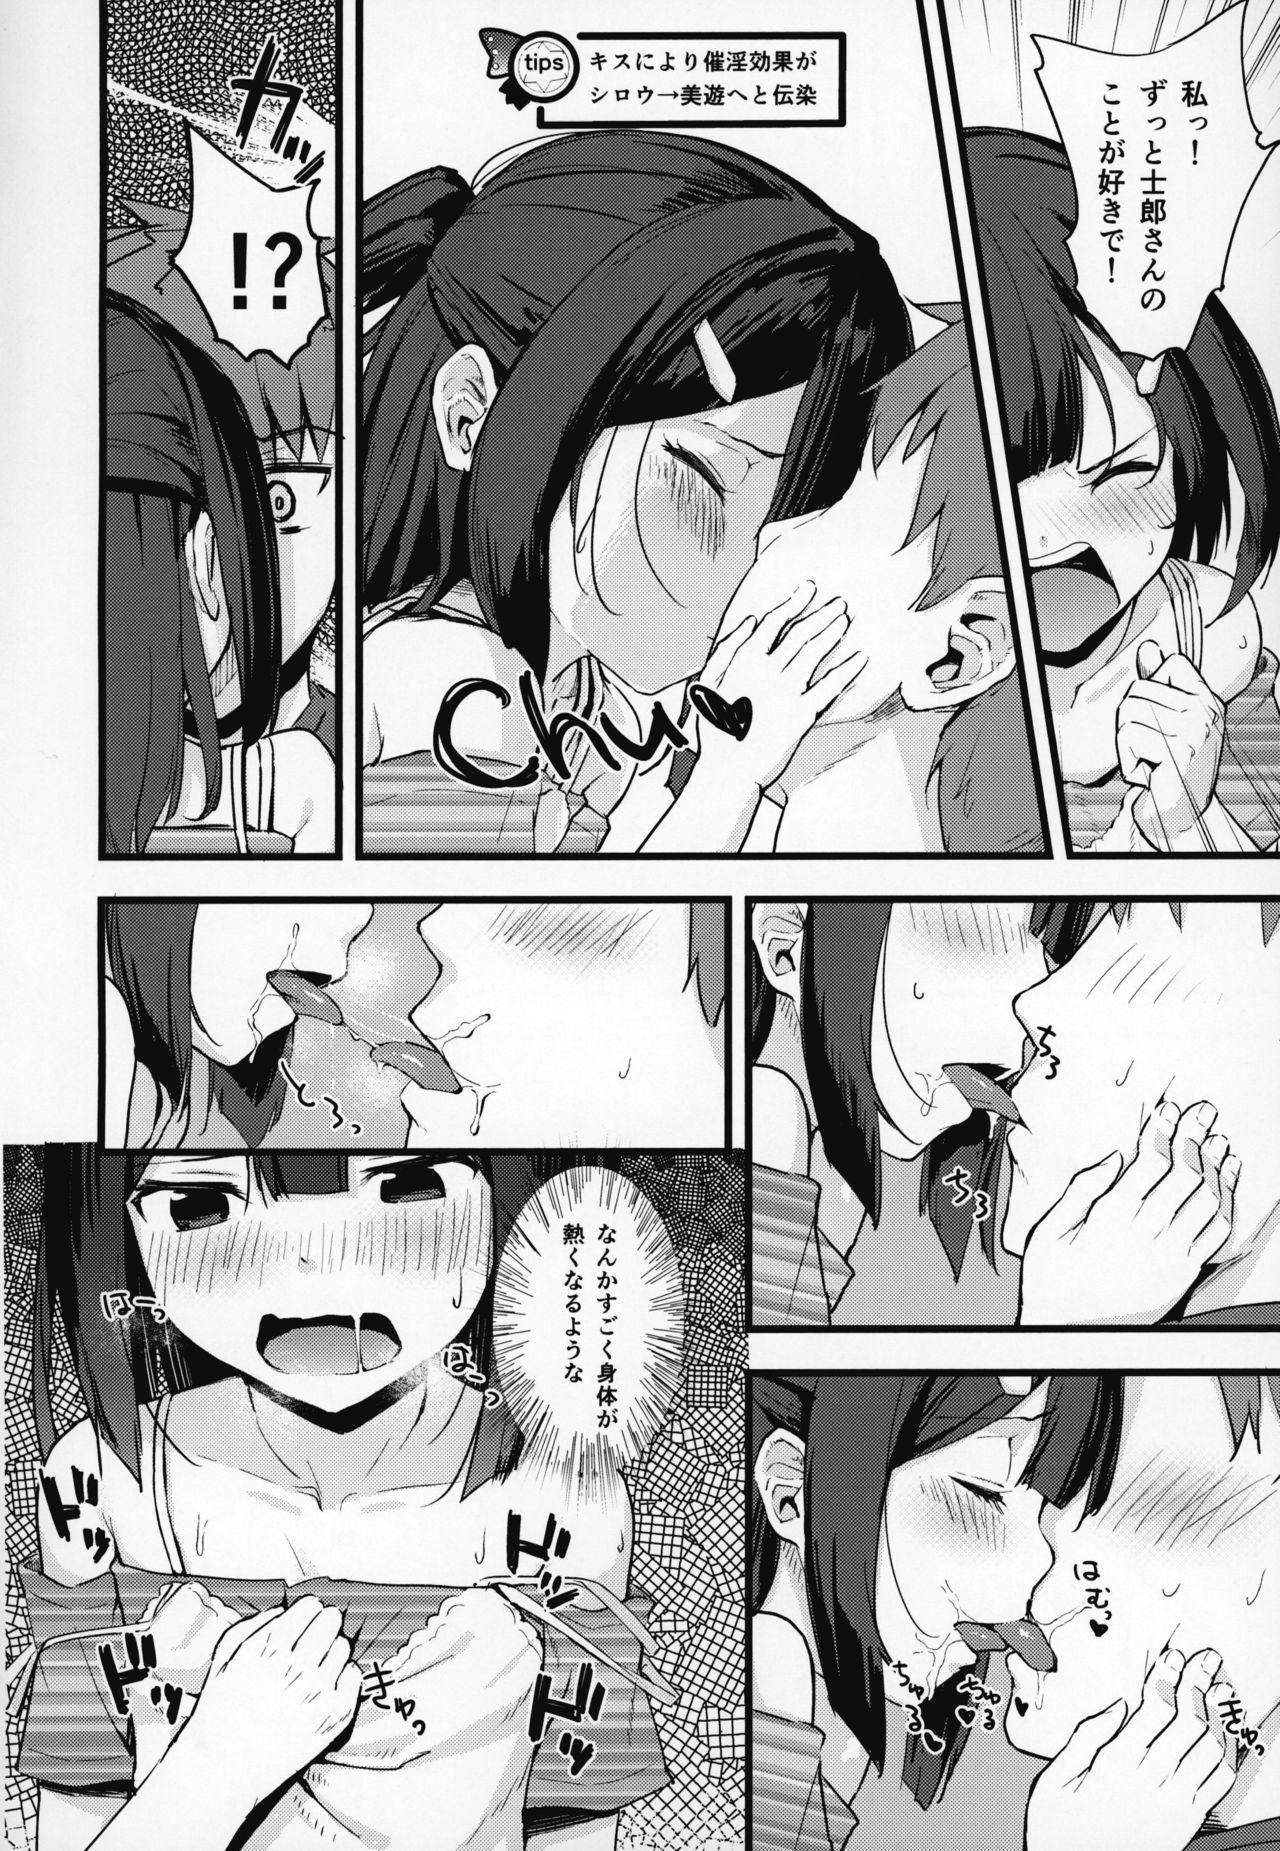 Banho Miyu-chan no Install! Sweet Sister! - Fate kaleid liner prisma illya Step Dad - Page 5